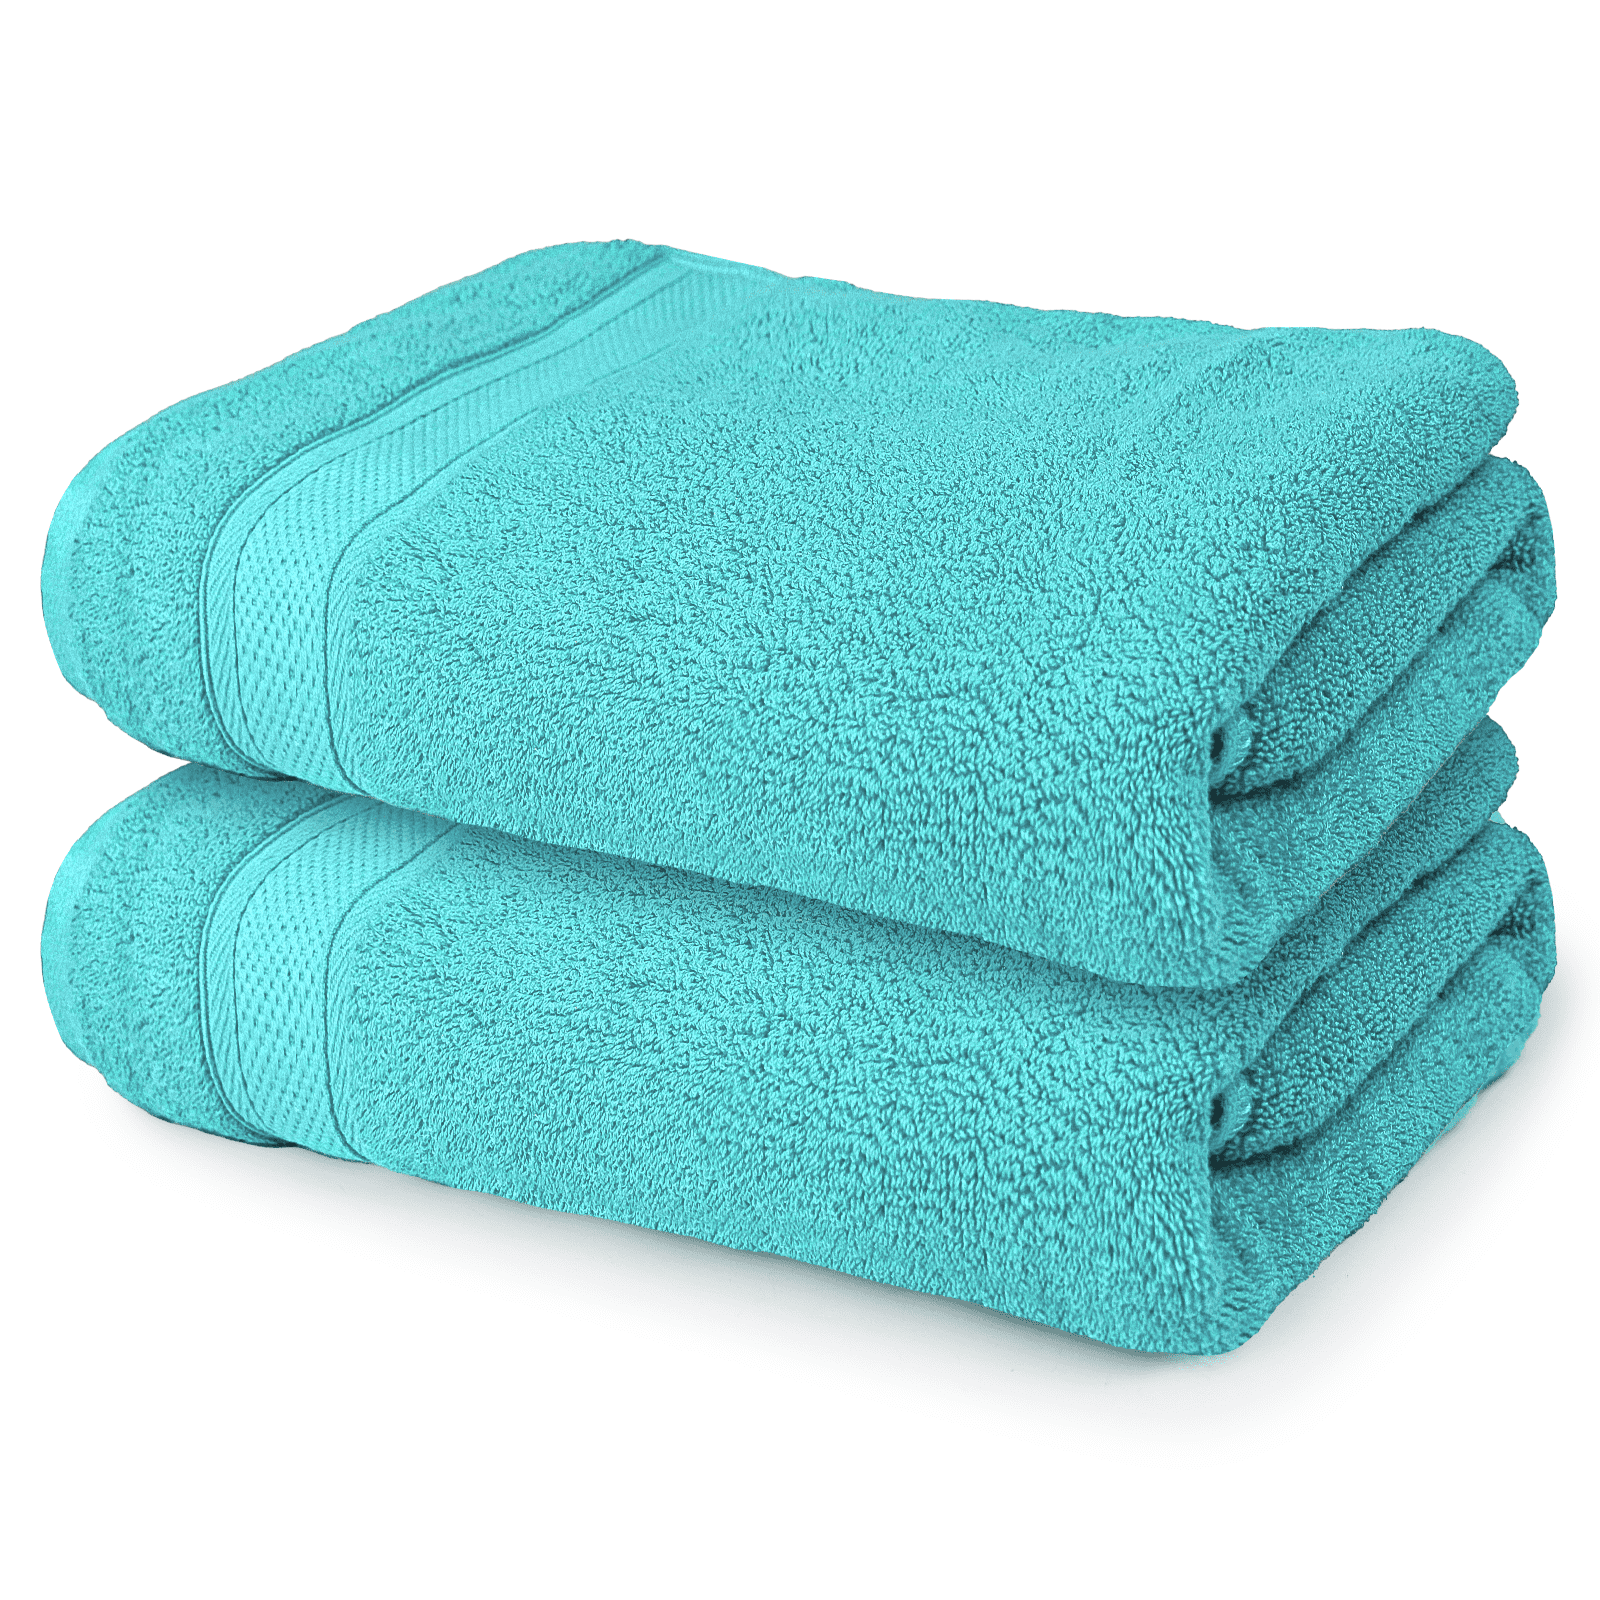 MoNiBloom 15pcs Bath Towel Set, 100% Cotton, Oversized Bath Sheet, 2 Bath Towels, 2 Hand Towels and 10 Washcloths for Bathroom, Machine Washable, Gray